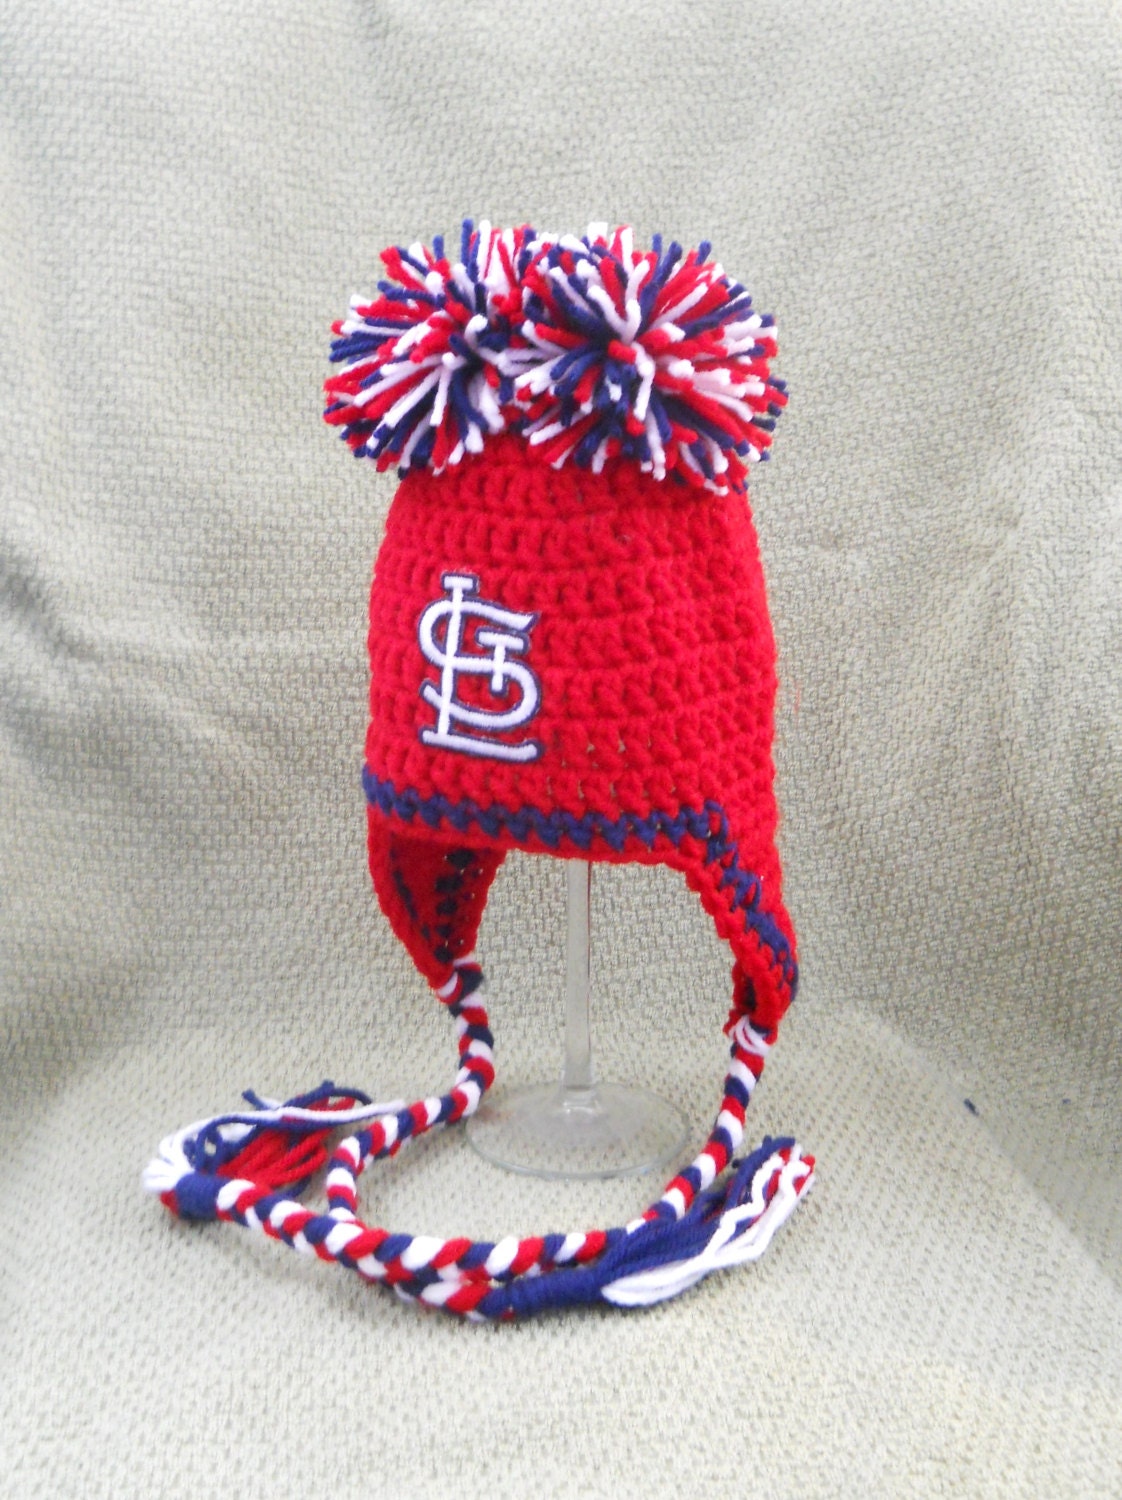 St. Louis Cardinals Baseball Inspired Baby Crochet by CDBSTUDIO